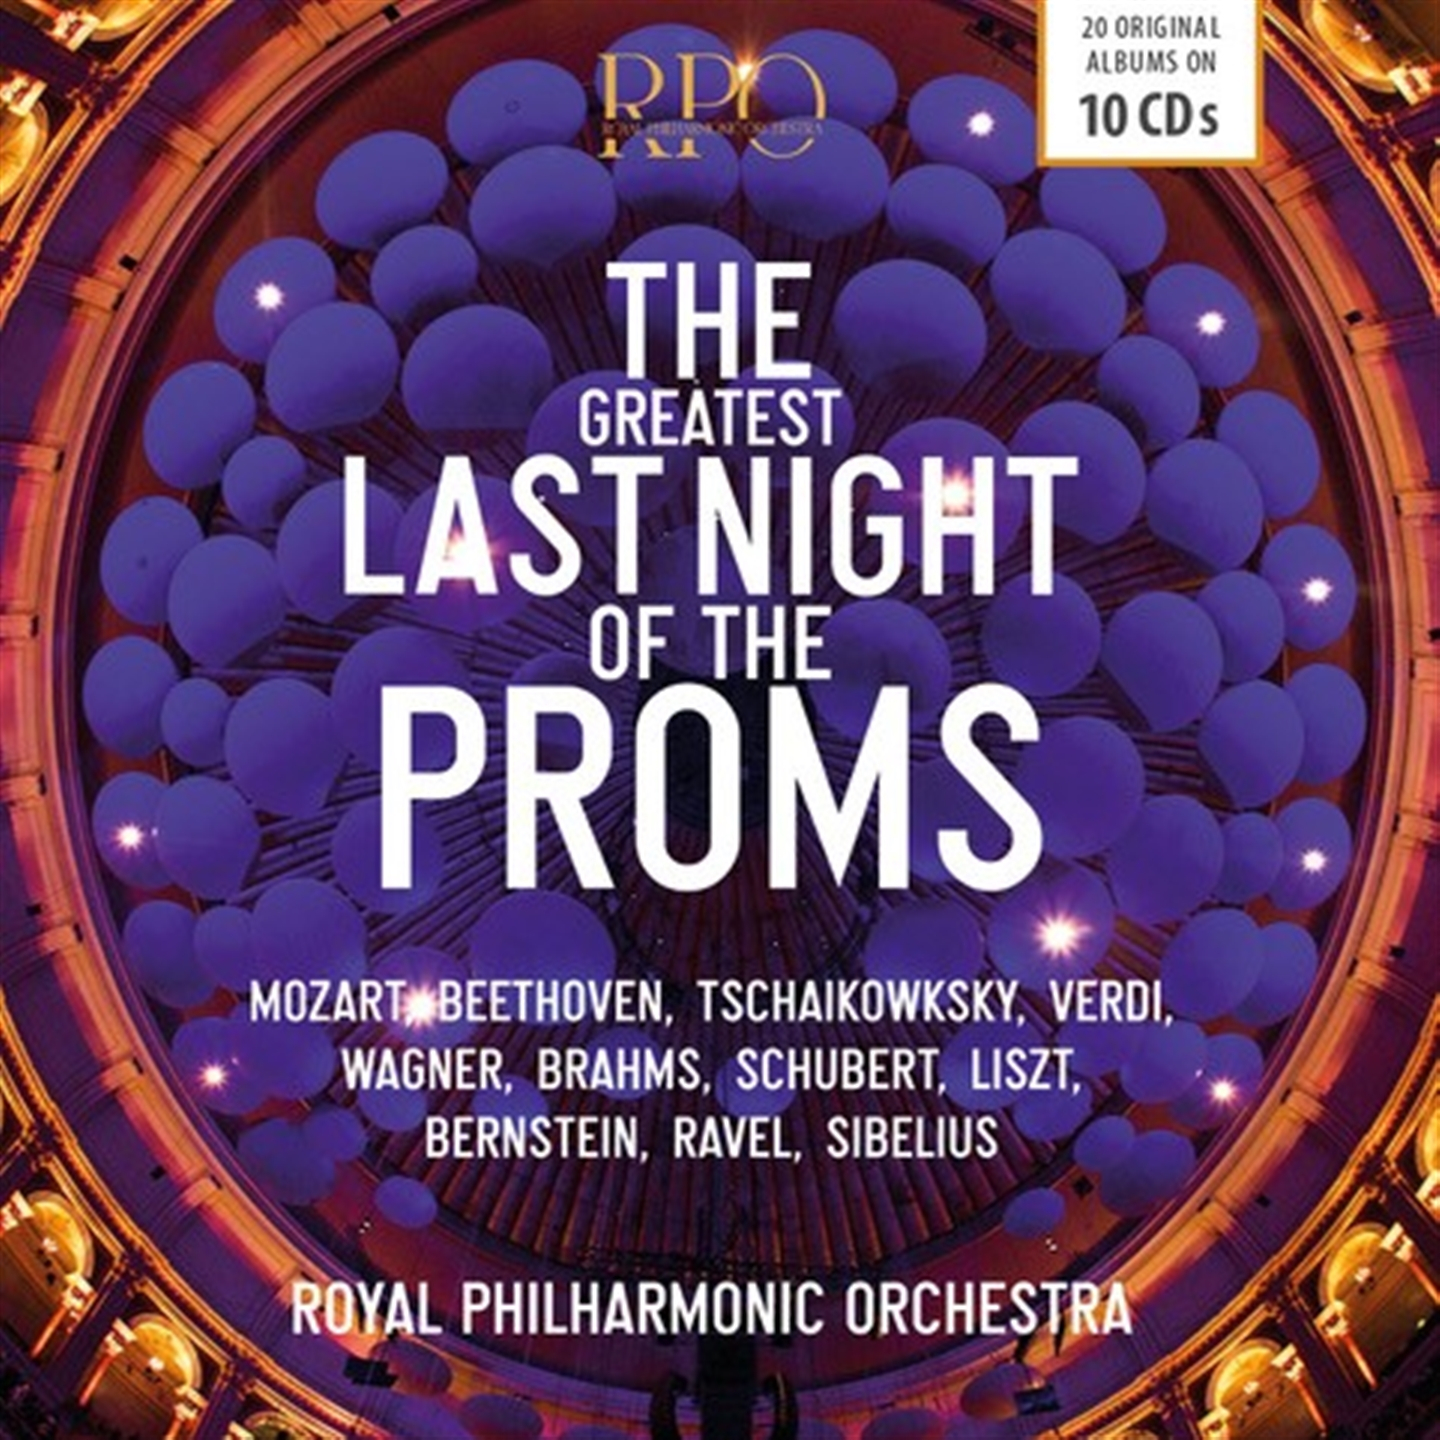 Royal Philarmonic Orchestra - The Greatest Last Night Of The Proms - Photo 1/1